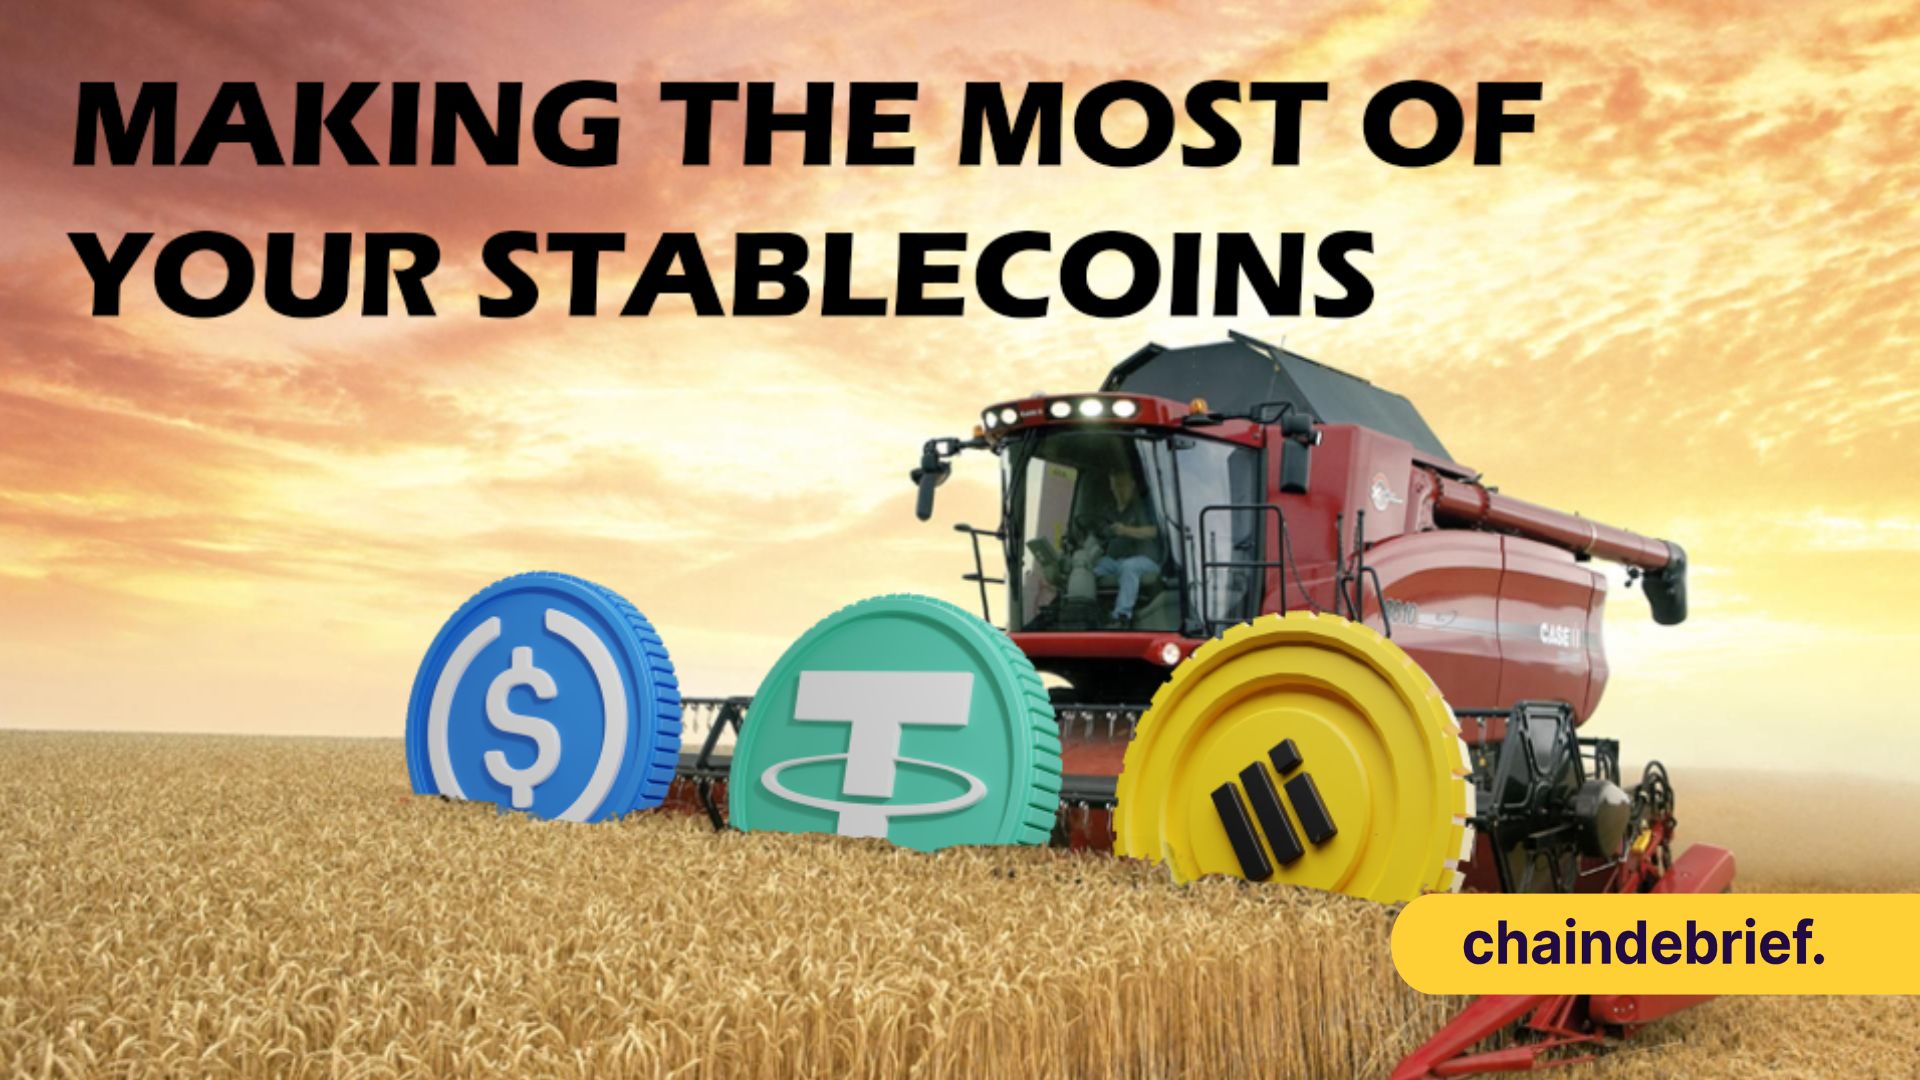 stablecoin yield farms